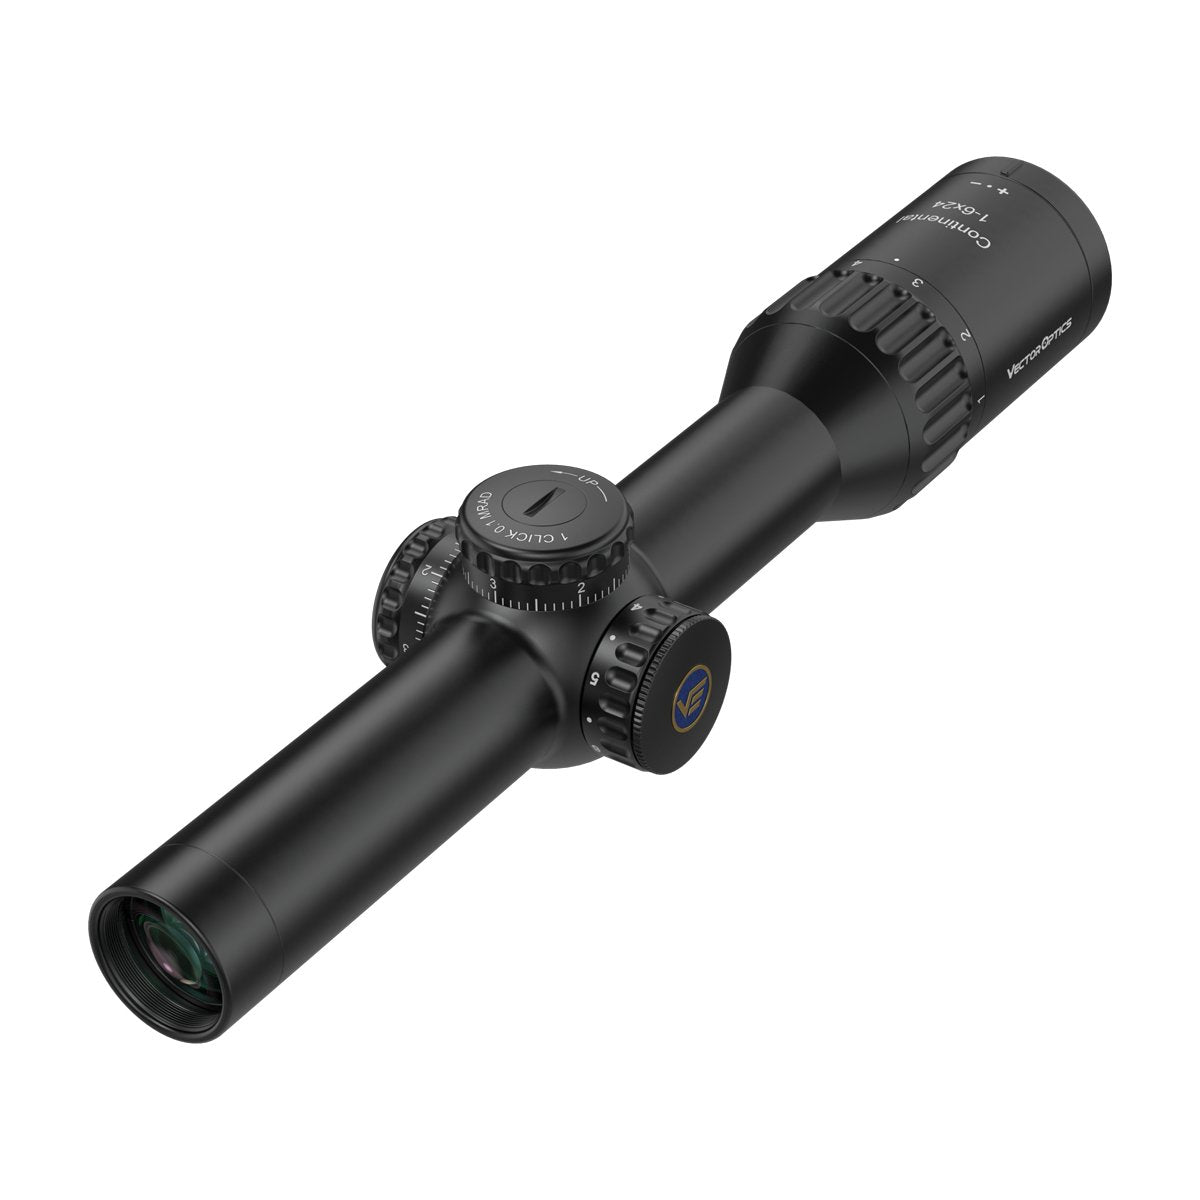 Vector Optics US Official Online Store - Riflescopes, Accessories